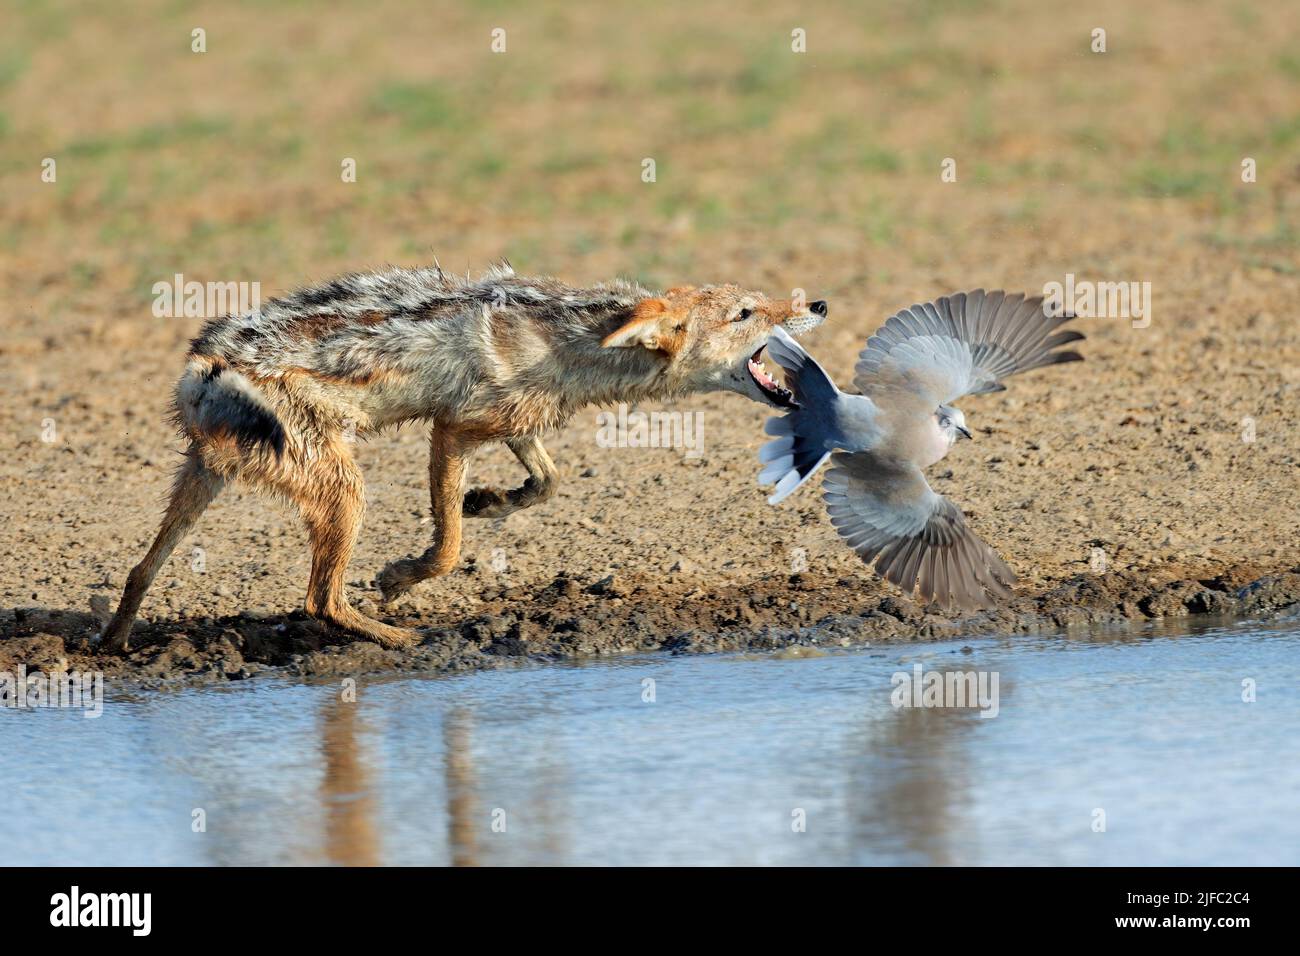 A black-backed jackal (Canis mesomelas) hunting a dove, Kalahari desert, South Africa Stock Photo